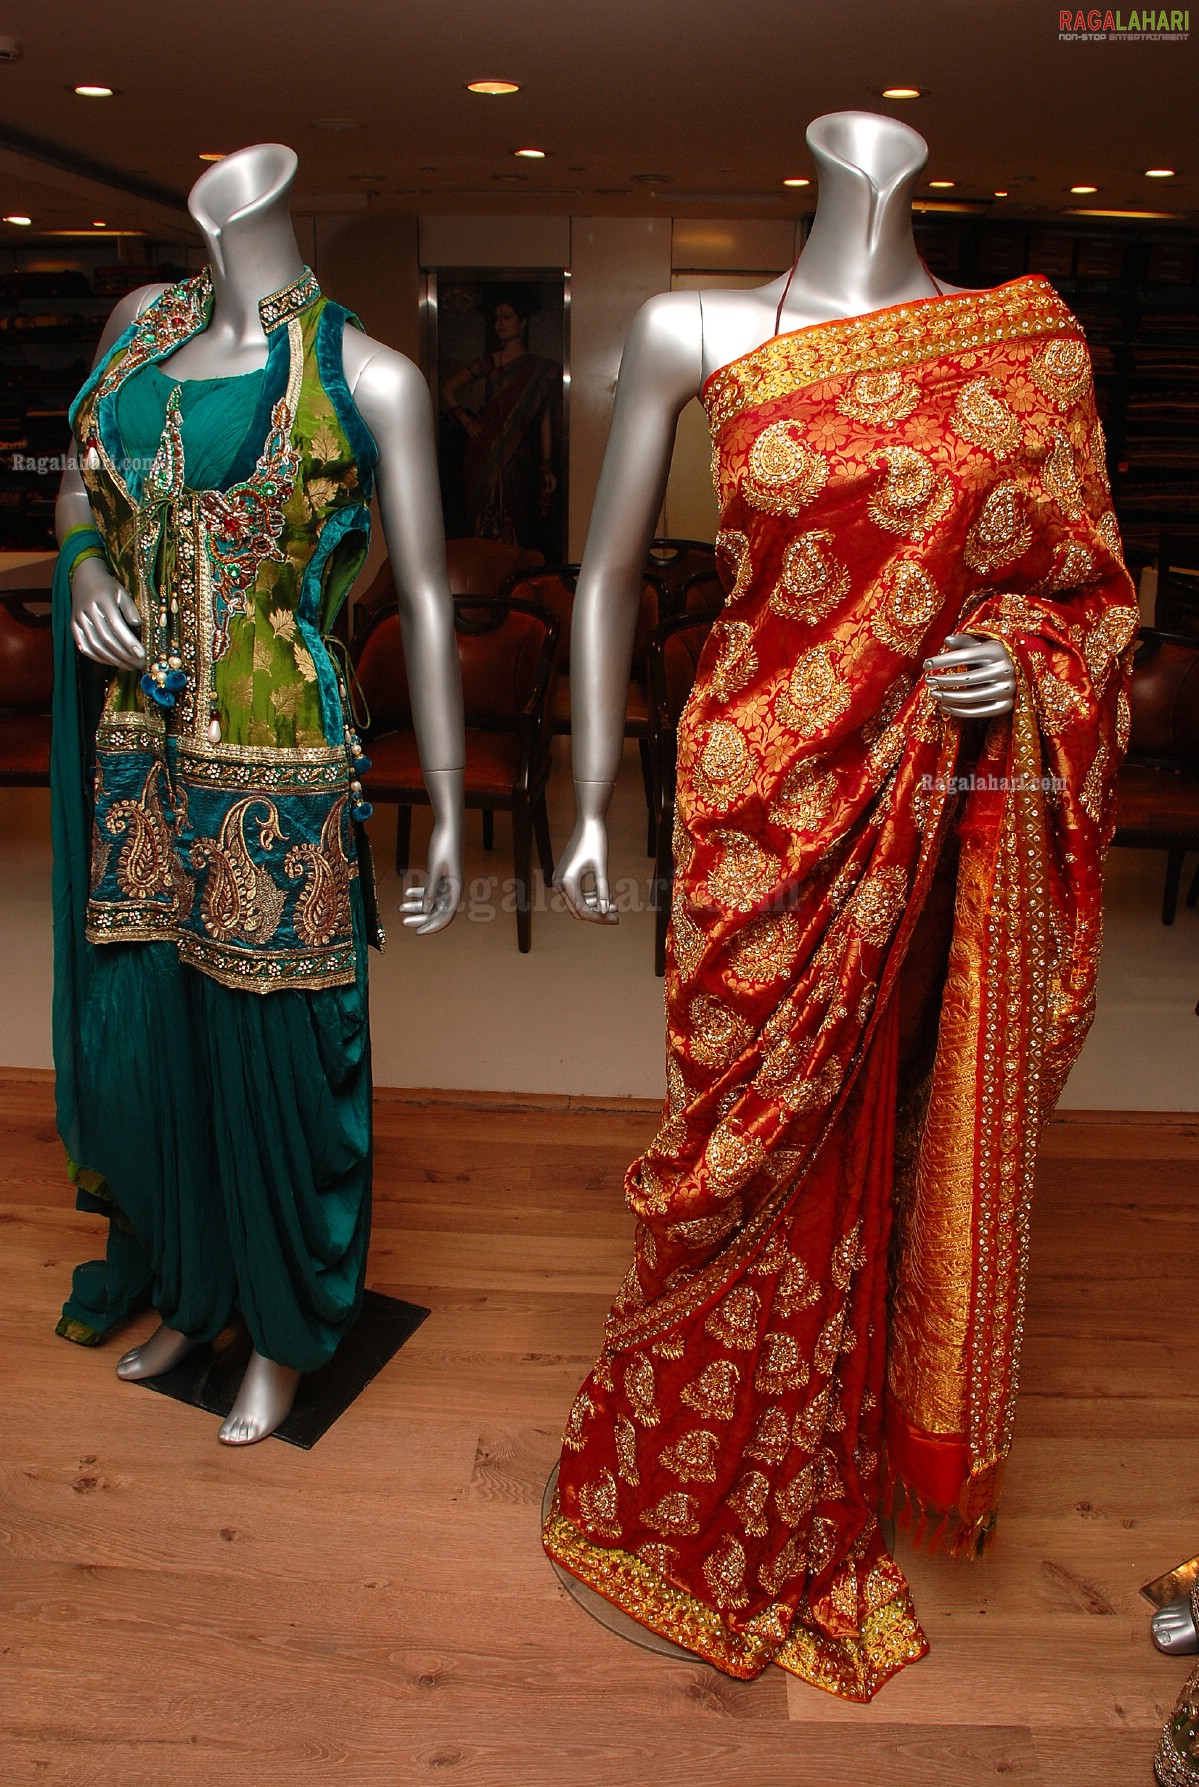 Neeru's Festive Season Bridal Collection 2011